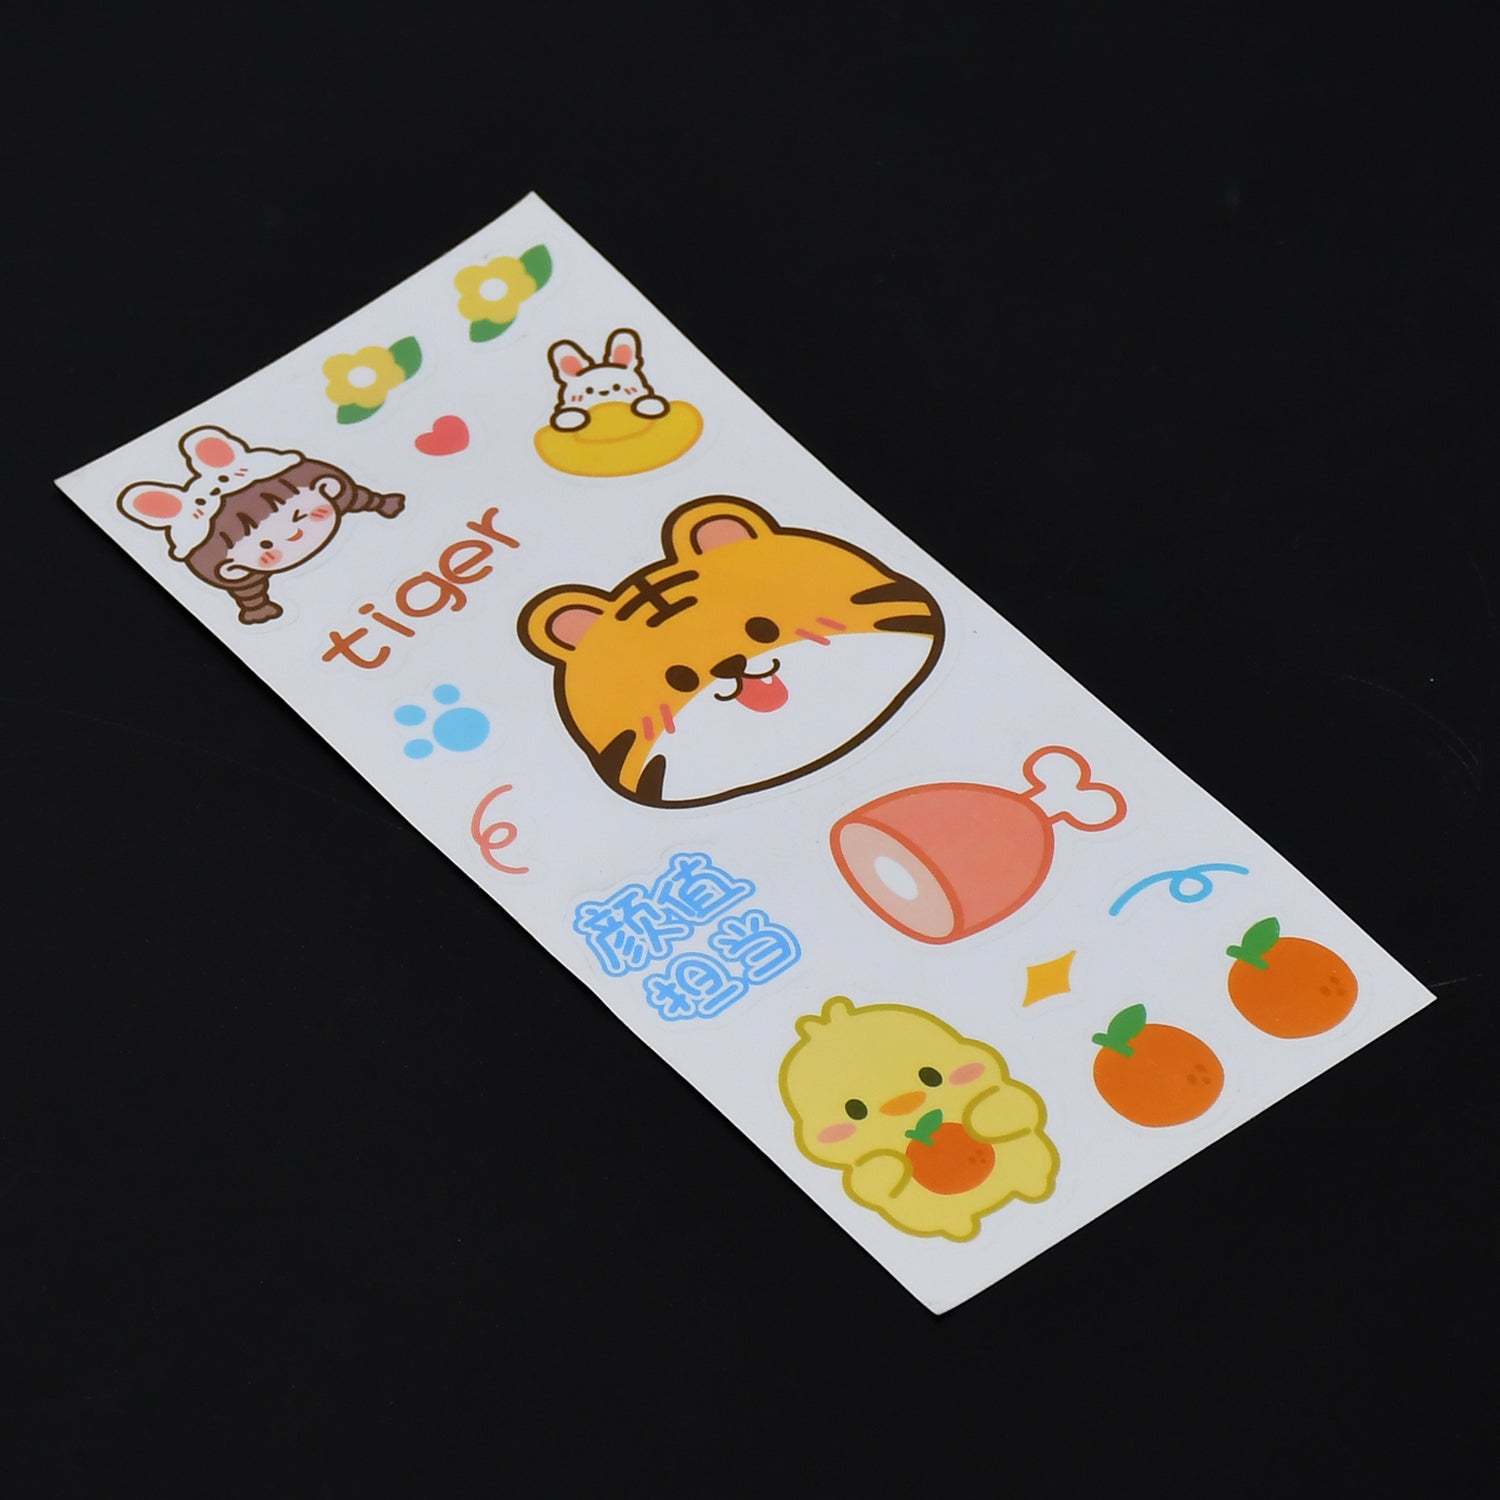 1149 Kids Stickers Cartoon Animal & Fruit Stickers Decorative Stickers For Books Use DeoDap